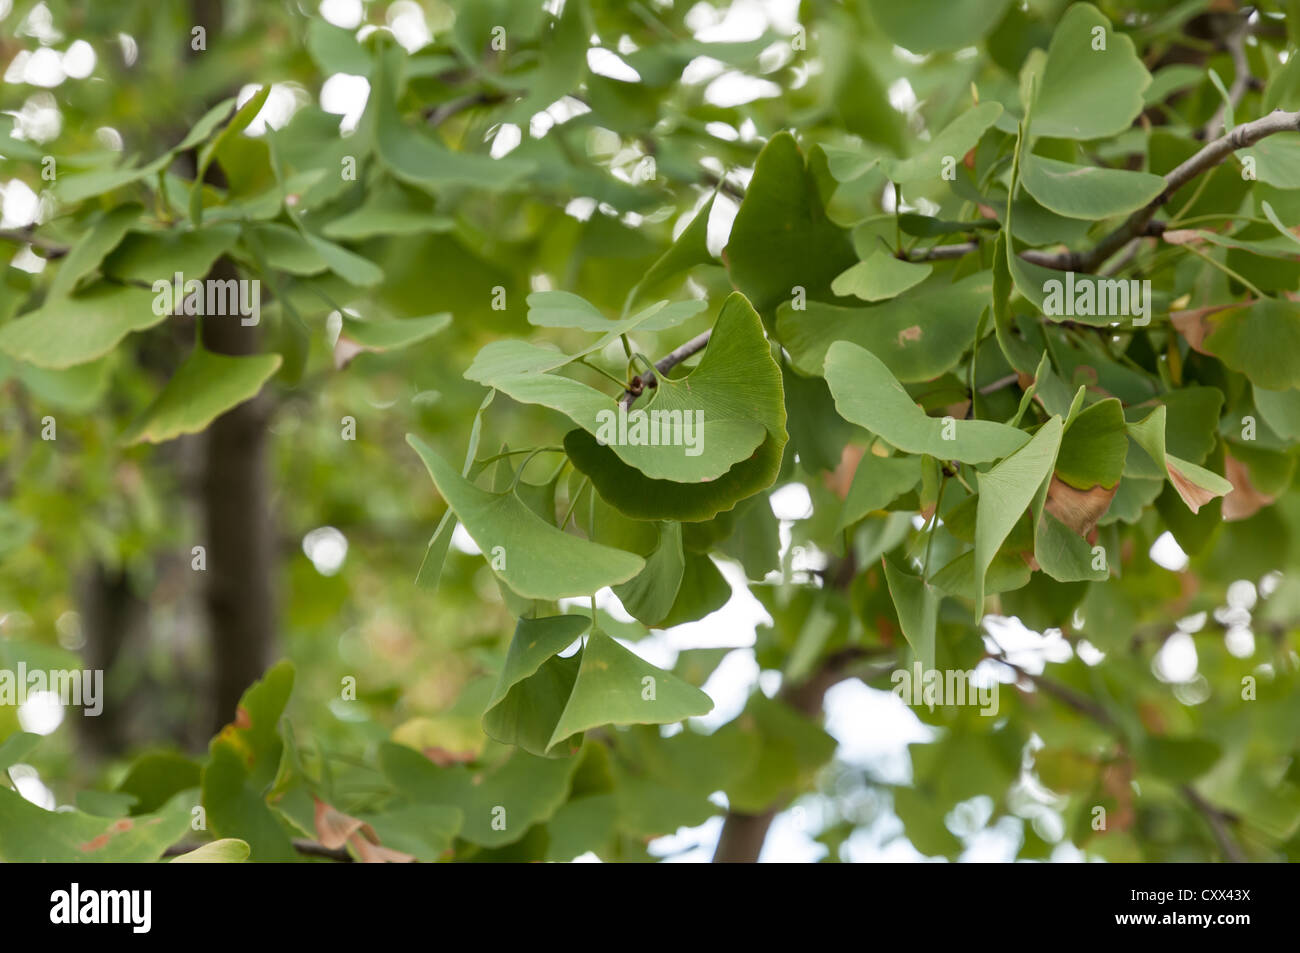 Leaves of Gingko Biloba tree Stock Photo